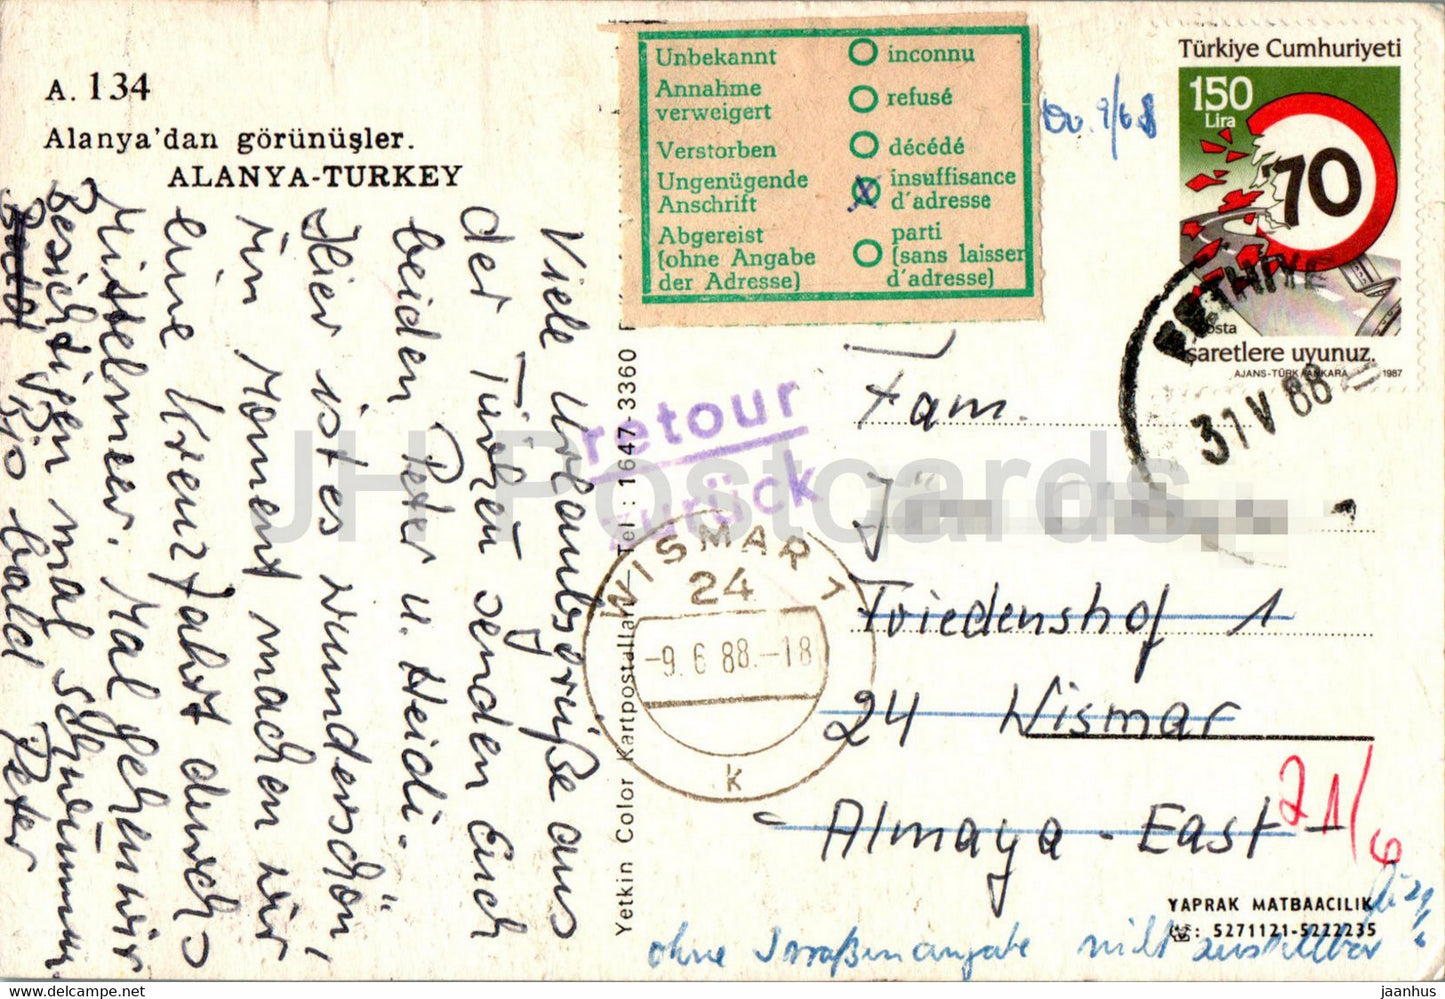 Alanya - Sevgiler - multiview - 134 - 1988 - Turkey - used